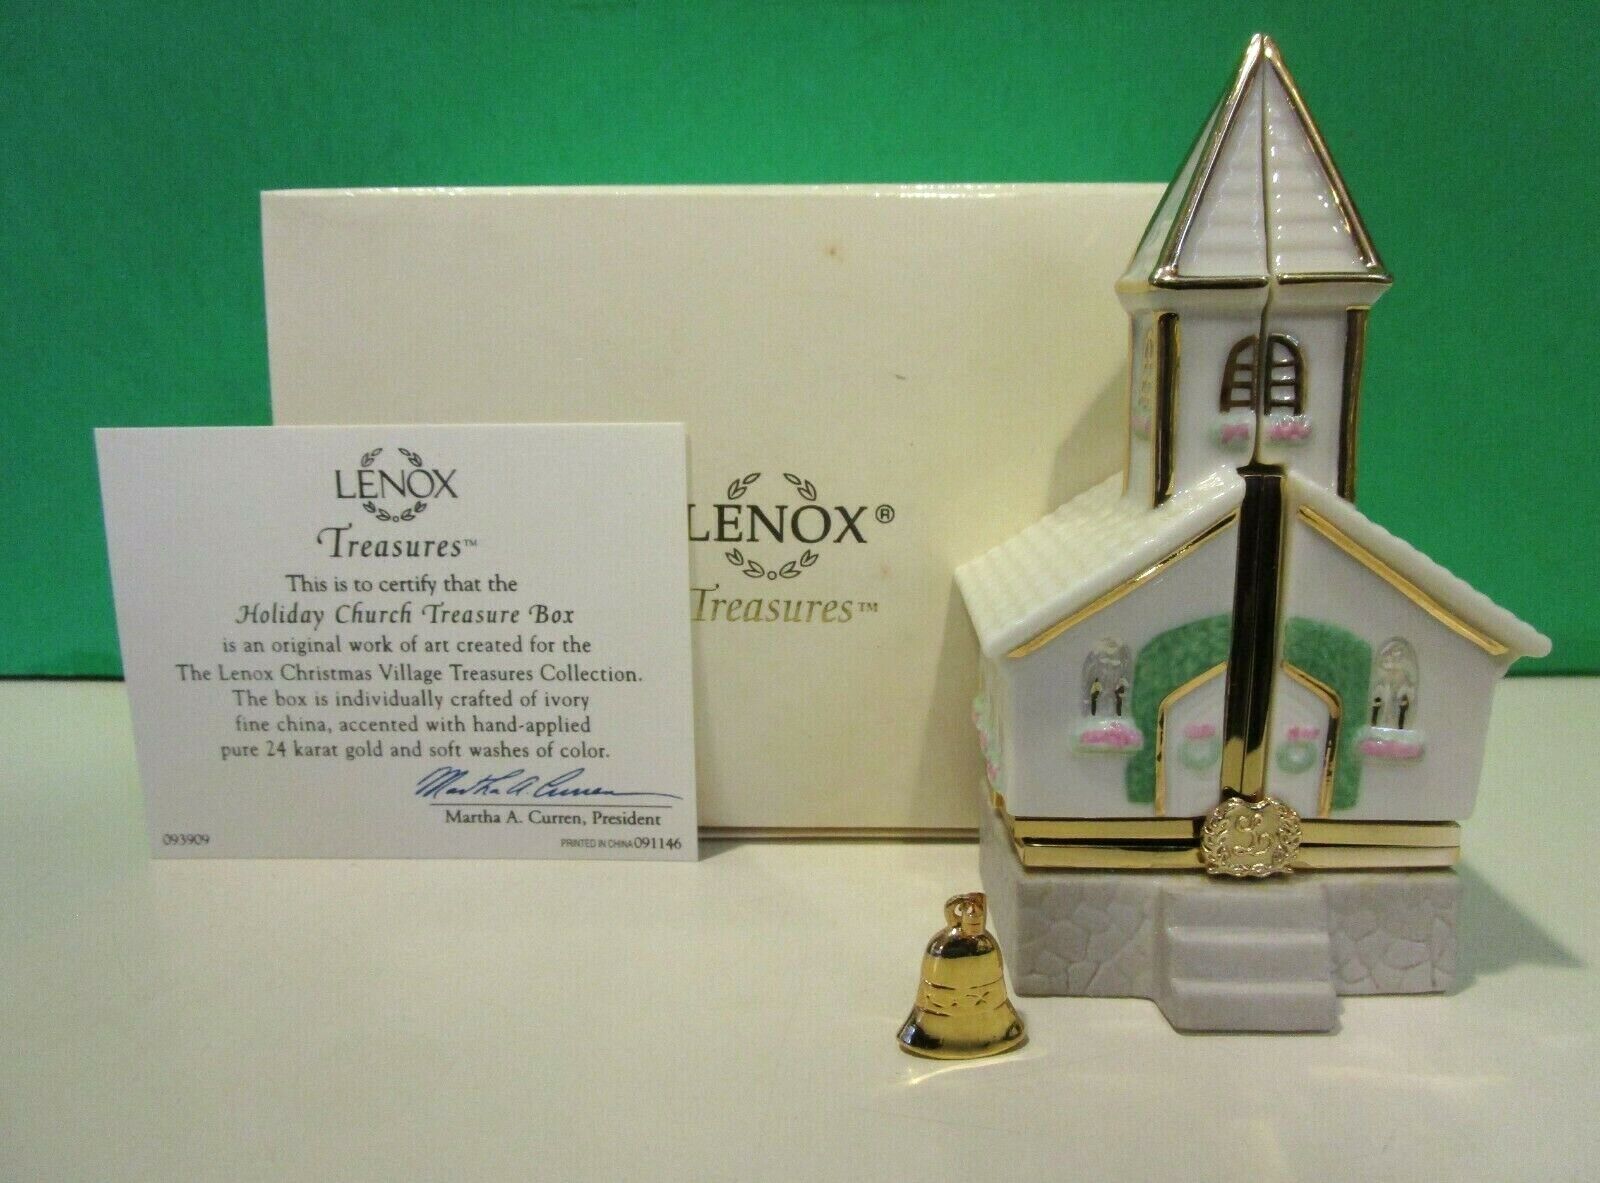 LENOX HOLIDAY CHURCH TREASURE BOX sculpture with BELL CHARM - - NEW in BOX COA